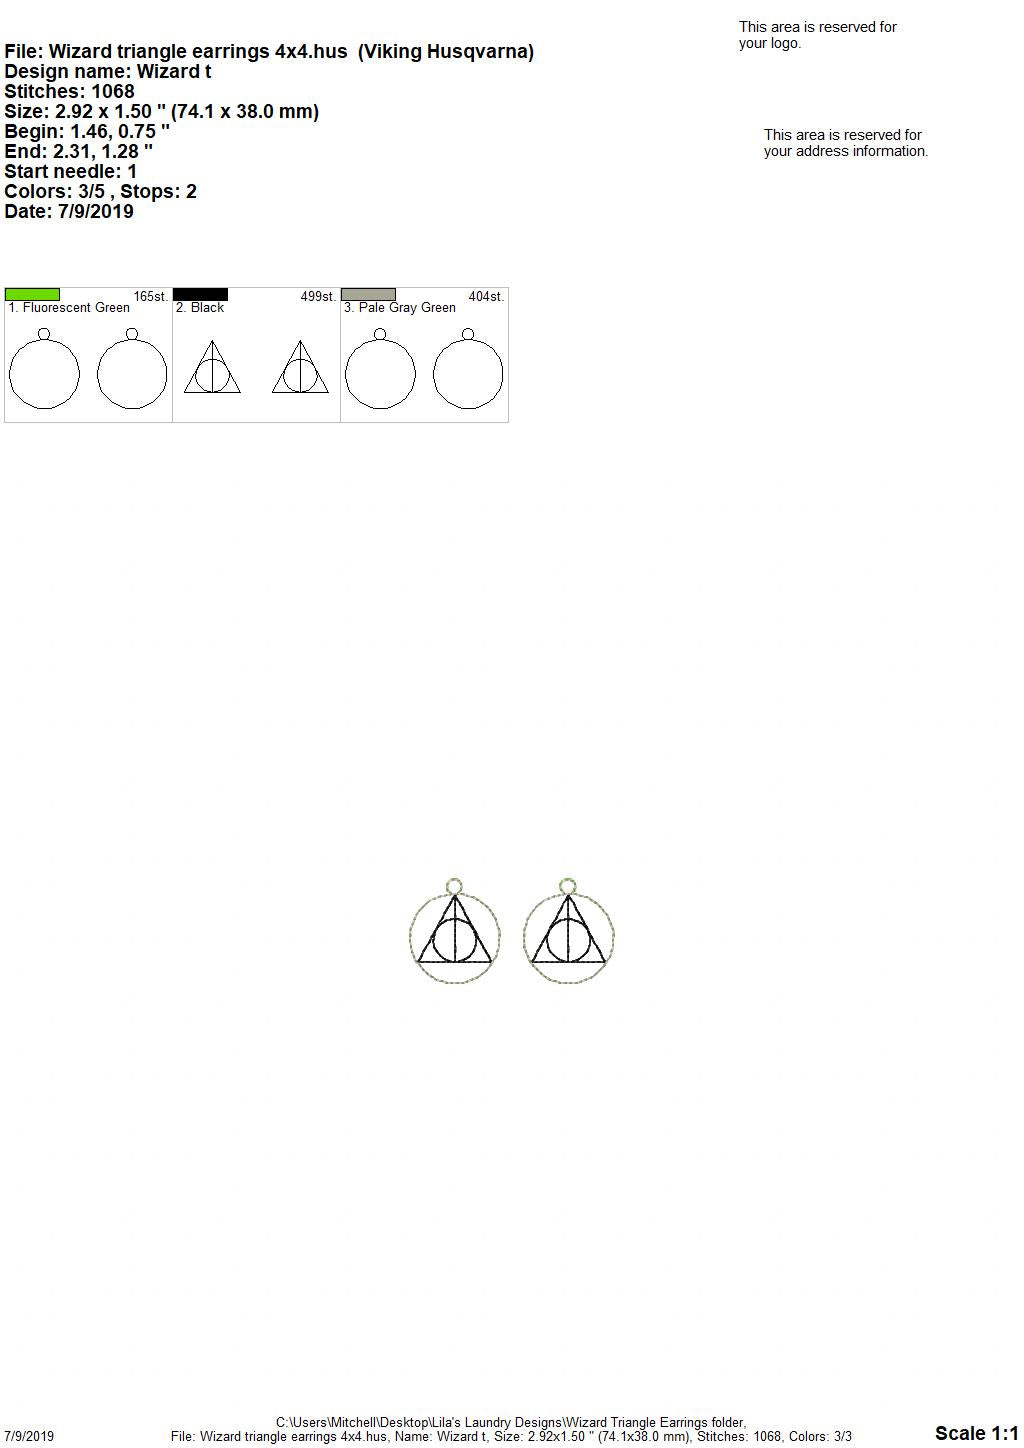 Wizard Triangle Earrings - Digital Embroidery Design